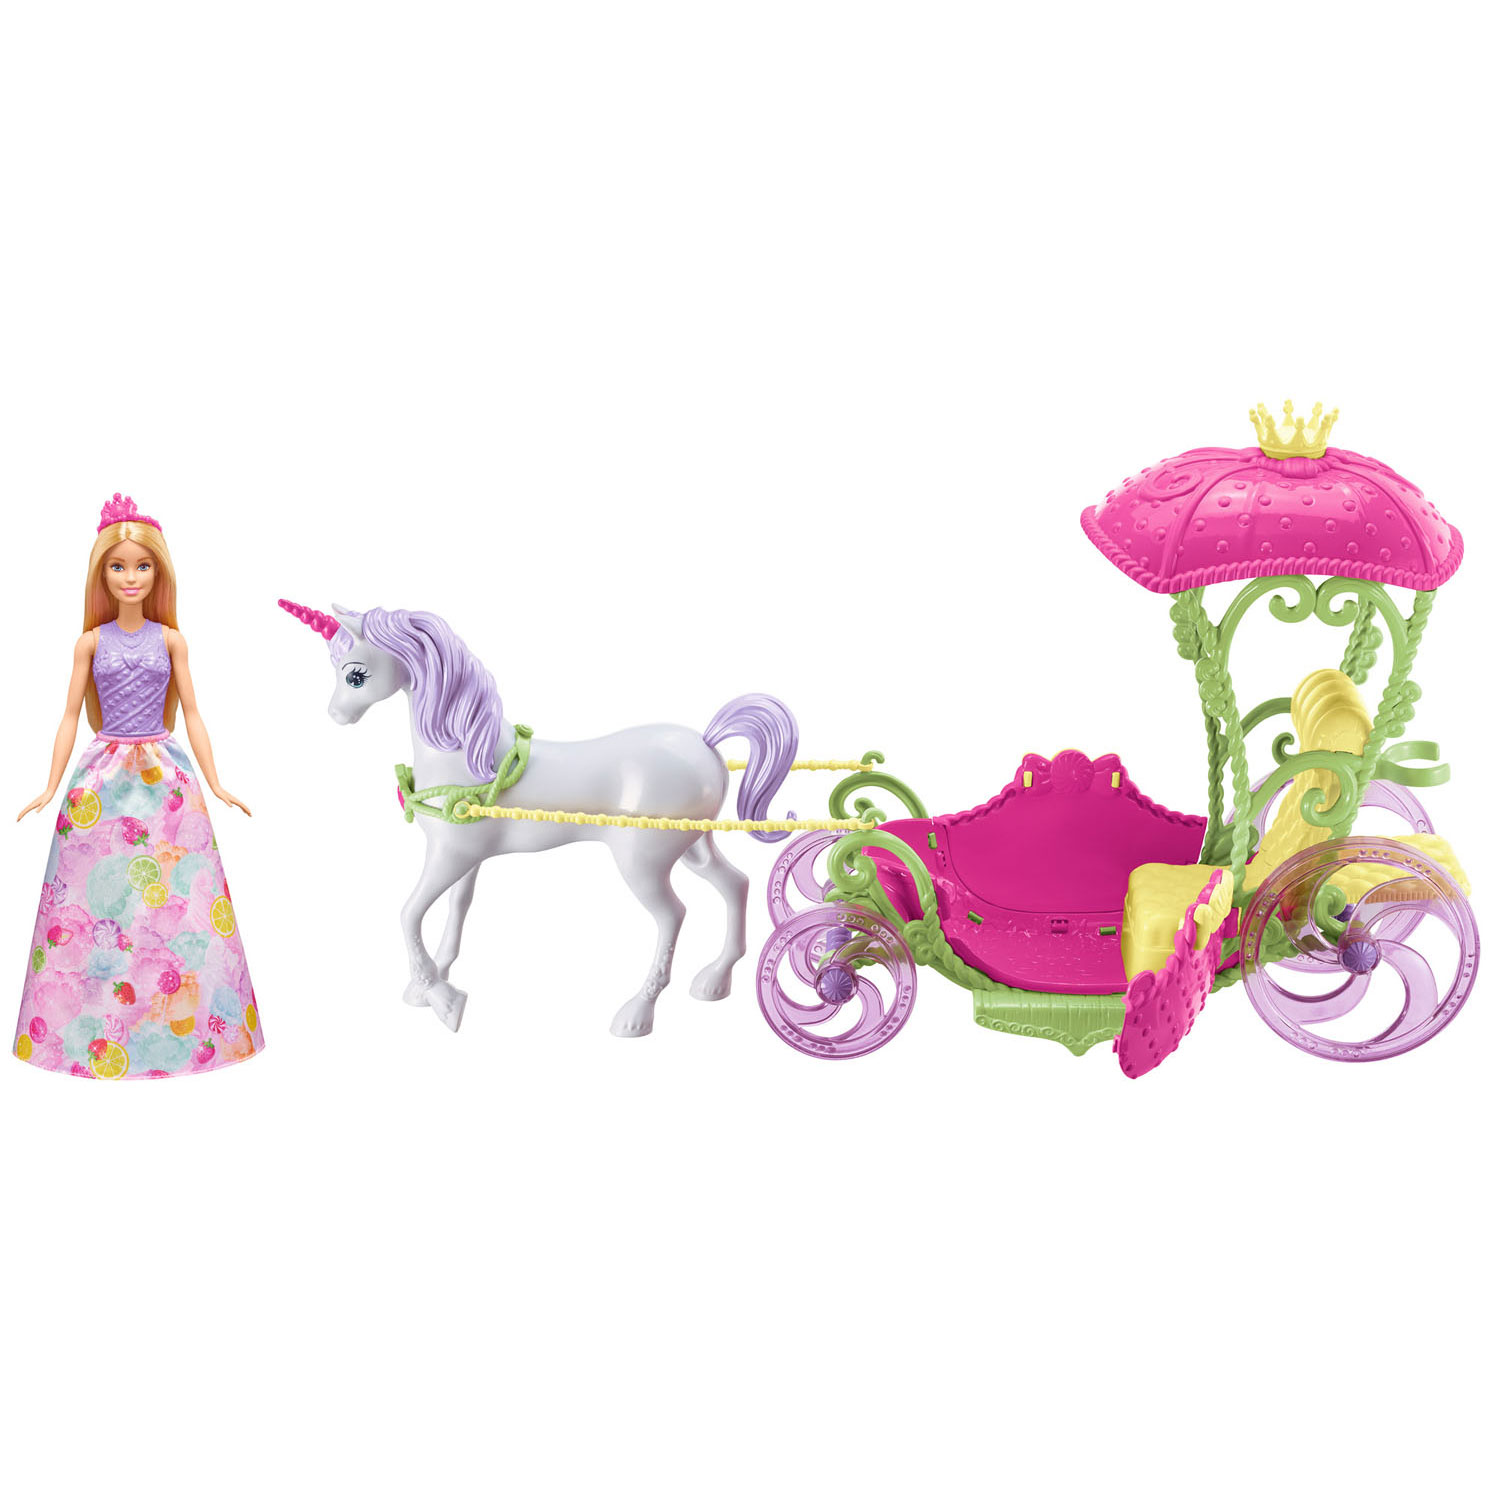 Laboratorium Ik heb het erkend Stadion Barbie Dreamtopia - Prinses met Koets | Thimble Toys